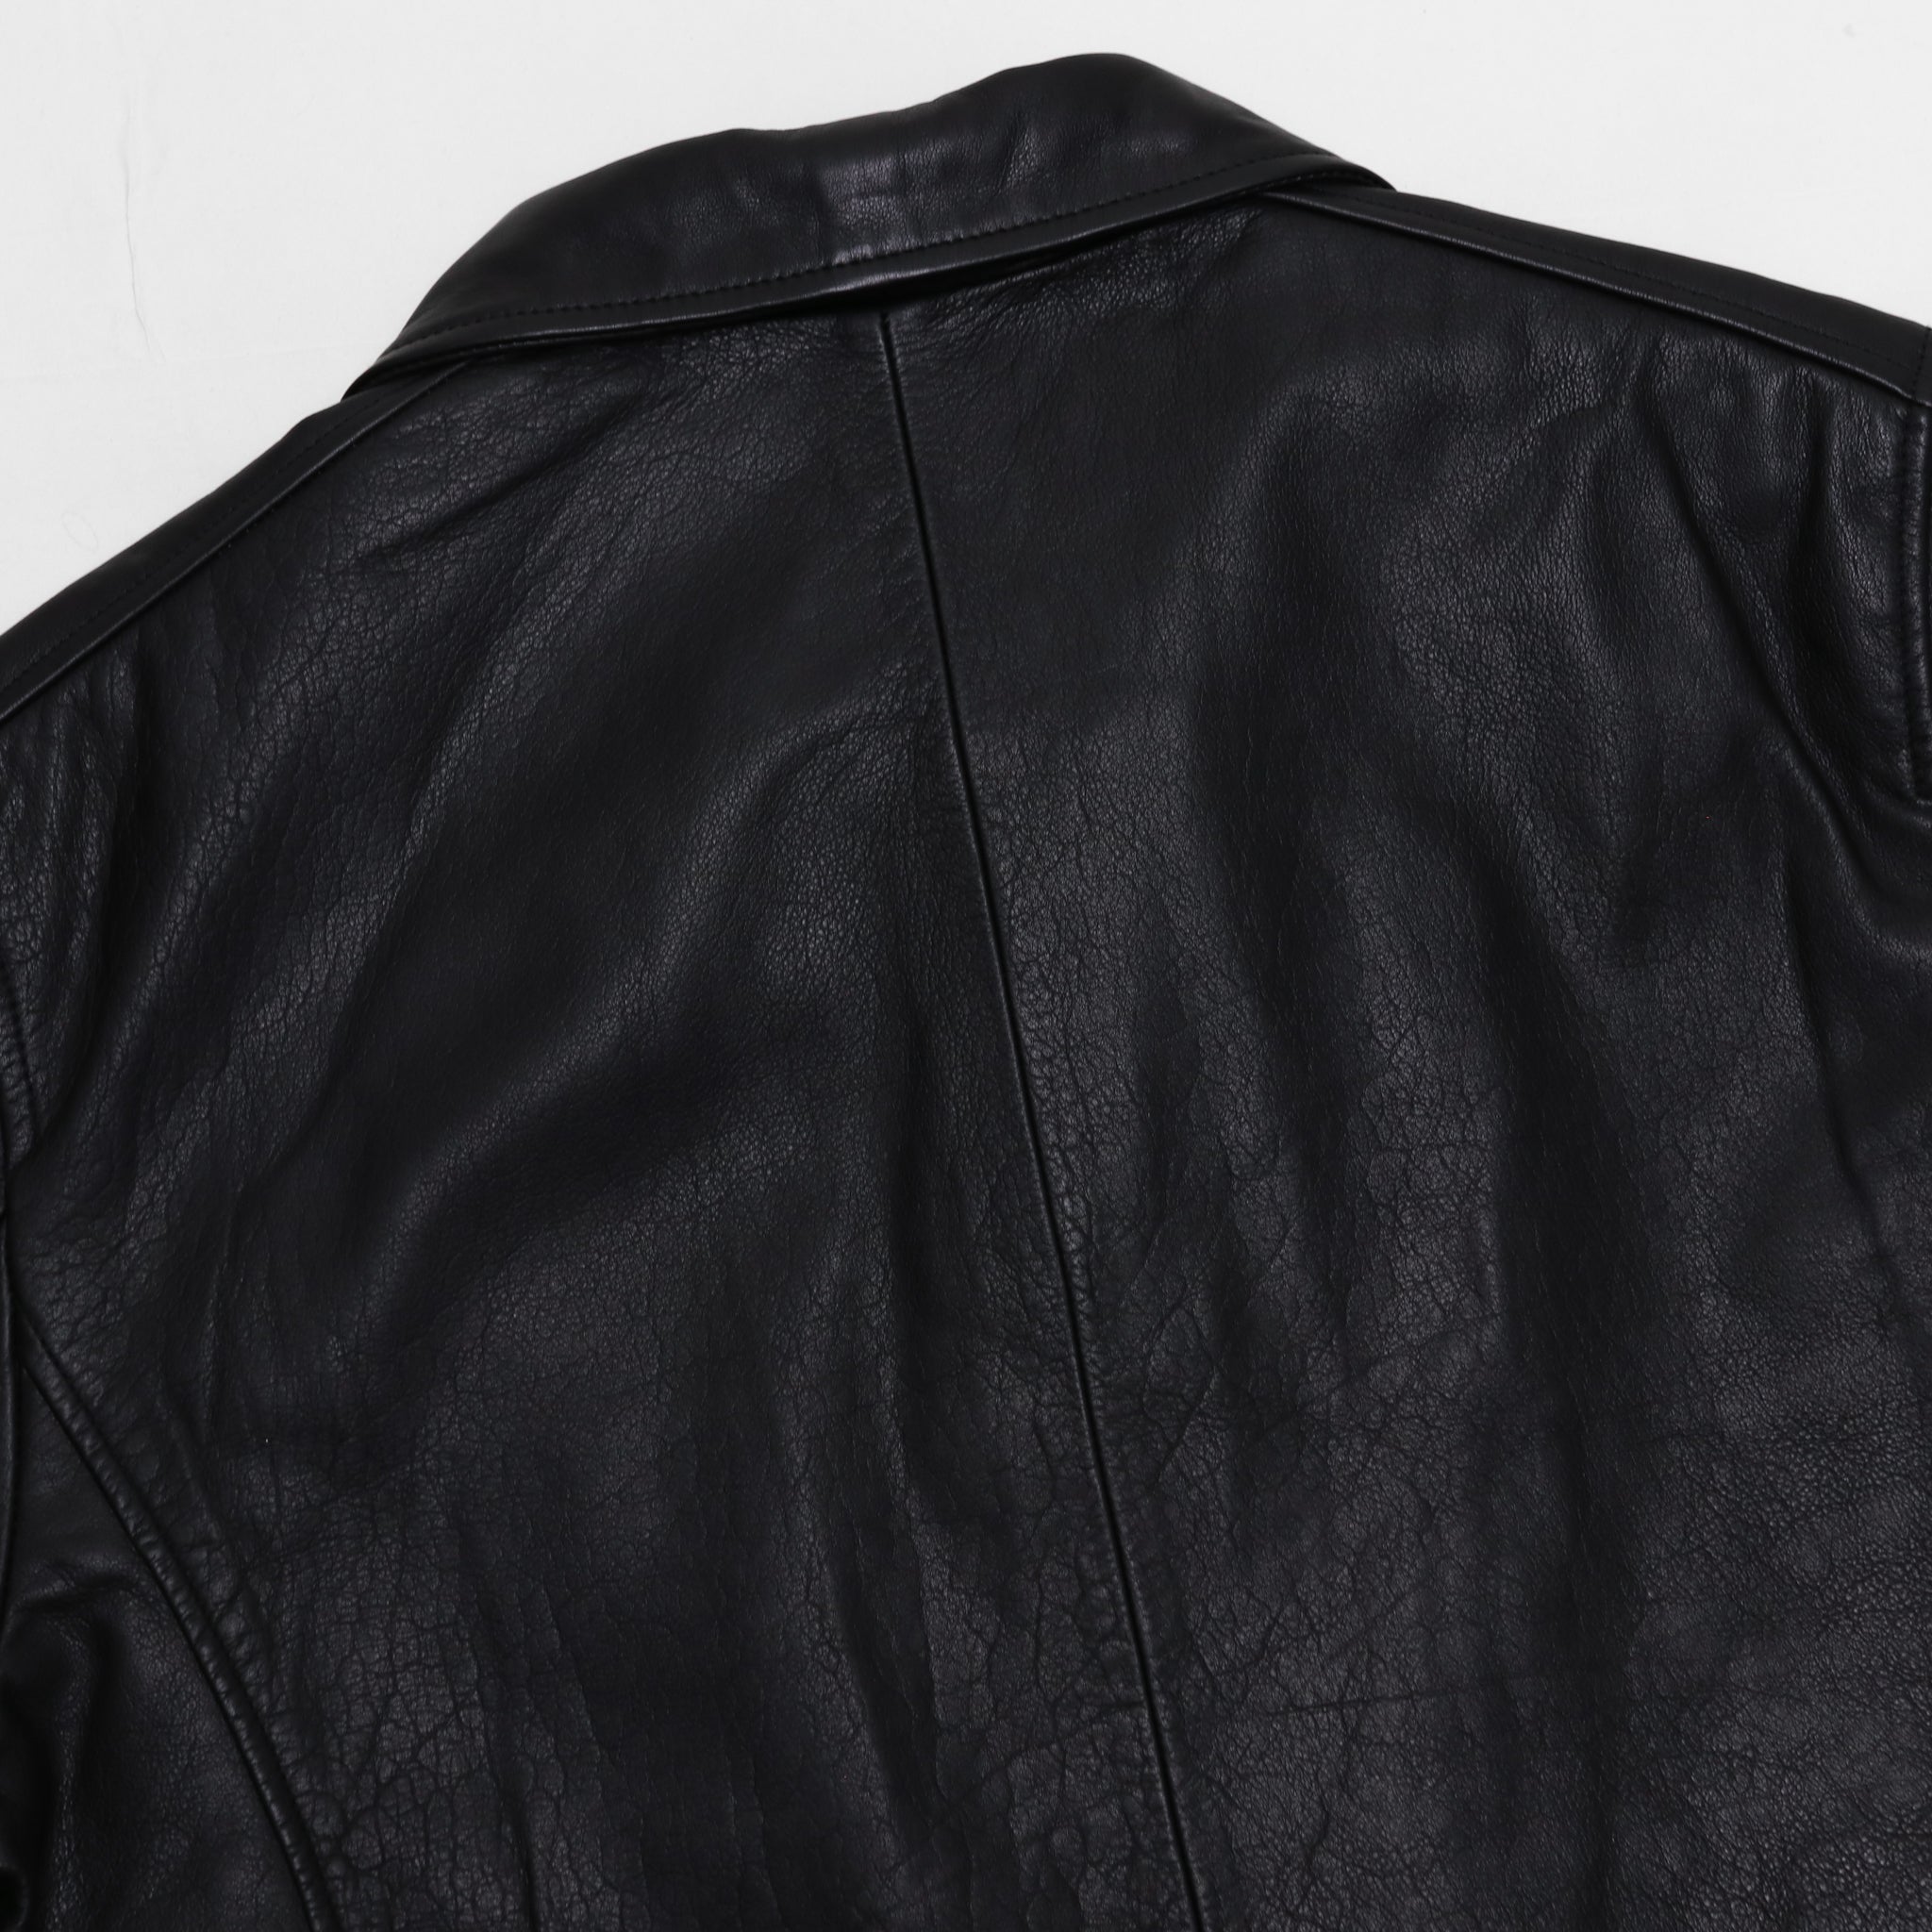 Men's Black Vanguard Classic Leather Biker Jacket | CAMOKAZI